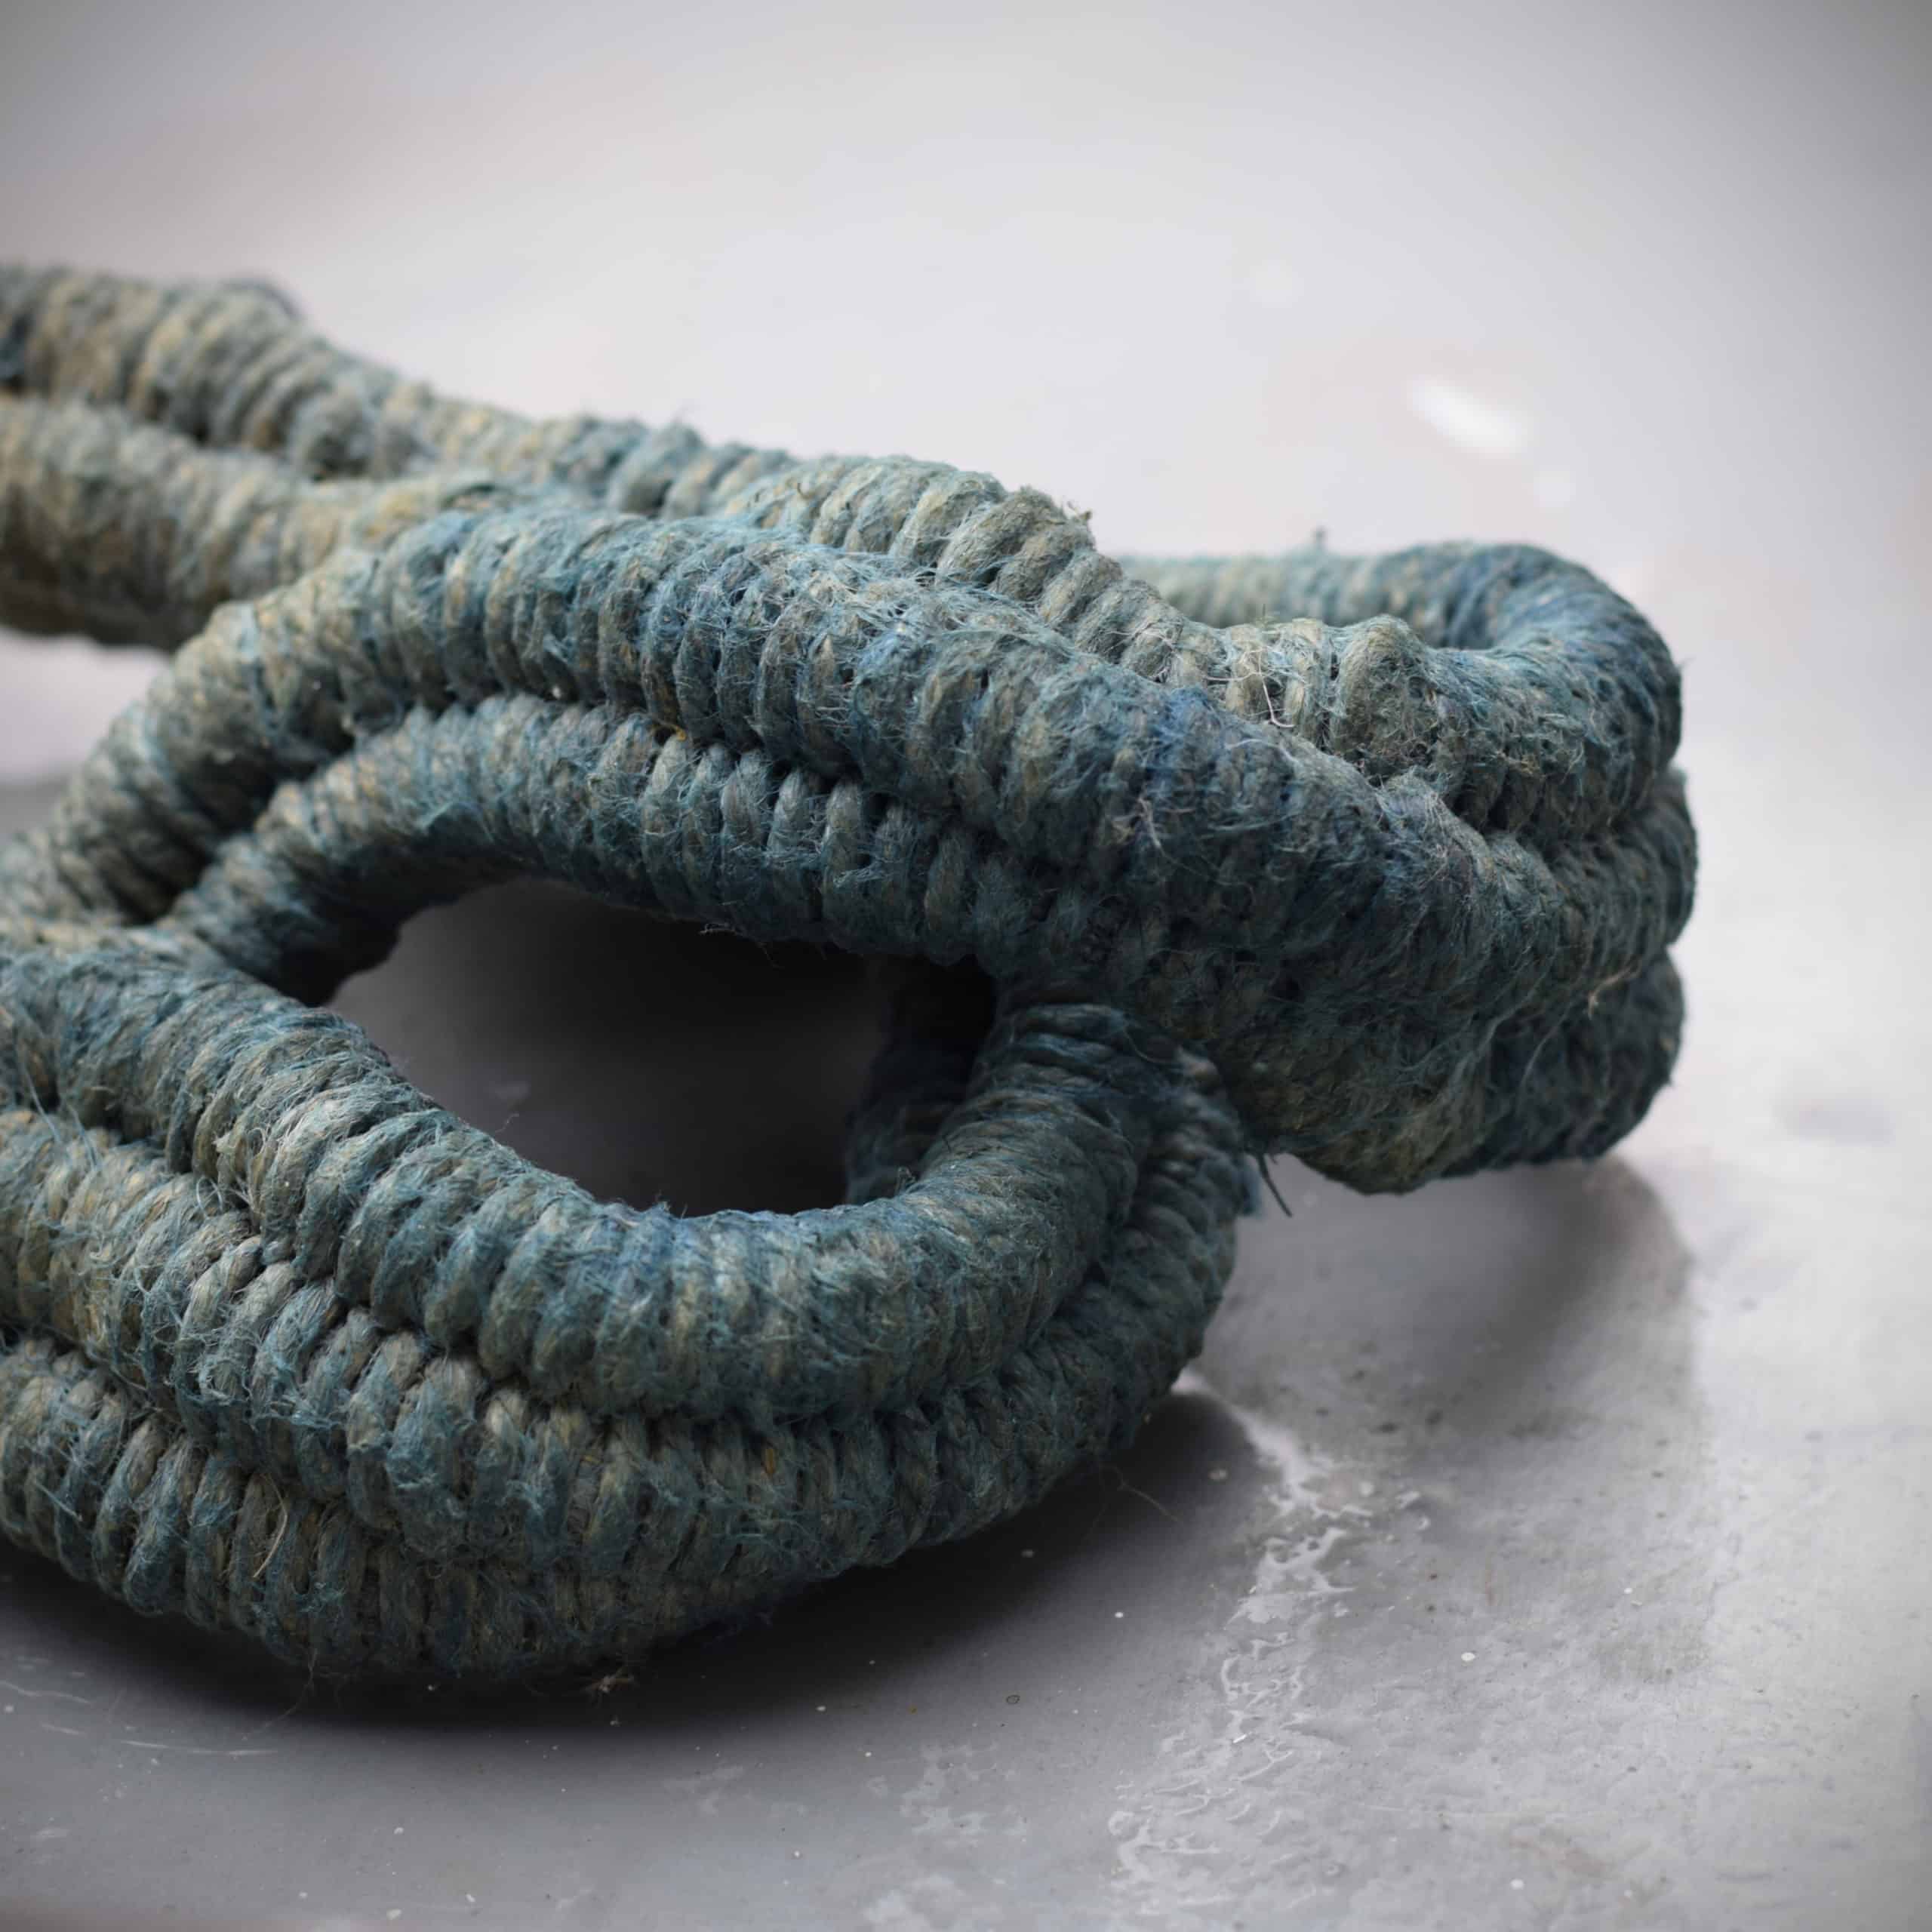 natural indigo blue linen sculpture by Aude Franjou close up on texture